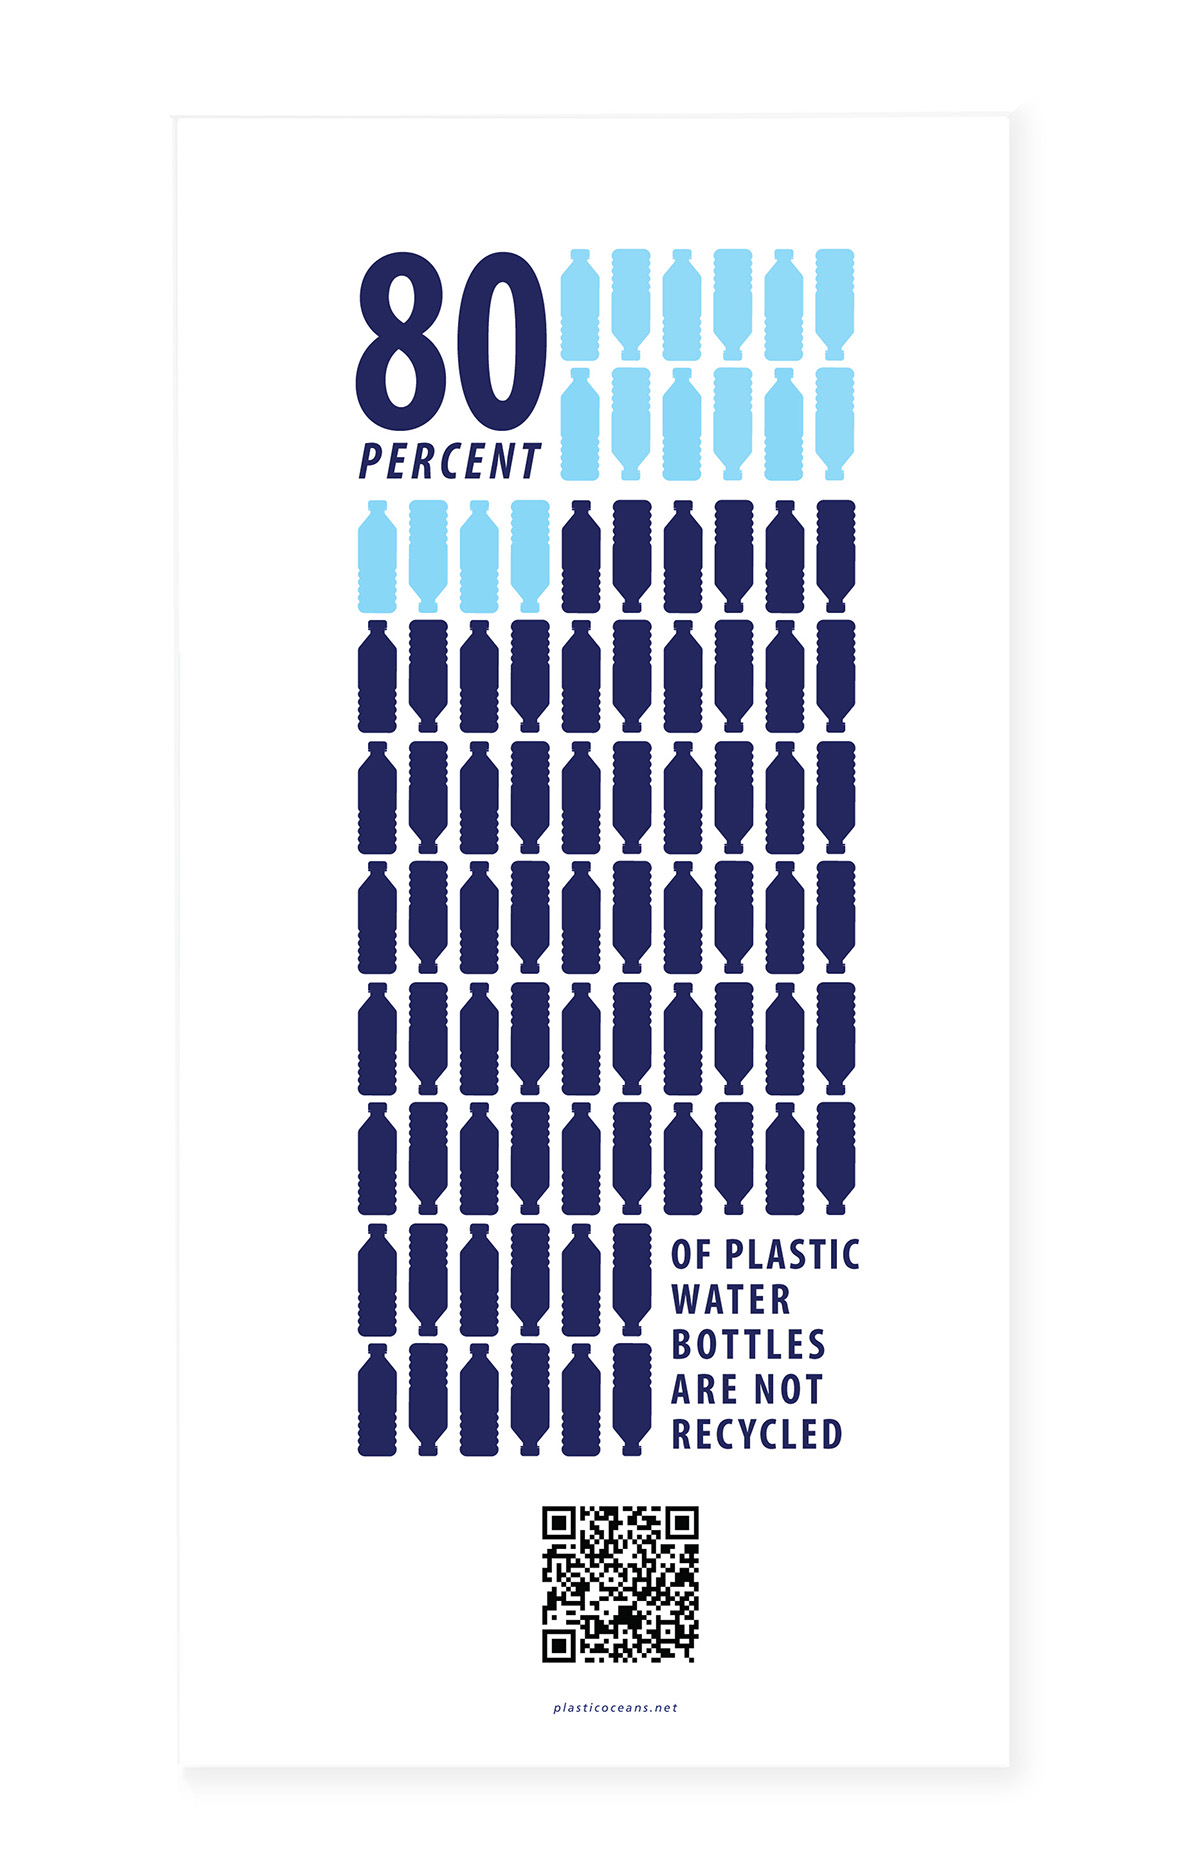 plastic Ocean fish Facts blue lake sea fishing seaweed world garbage patch great pacific garbage